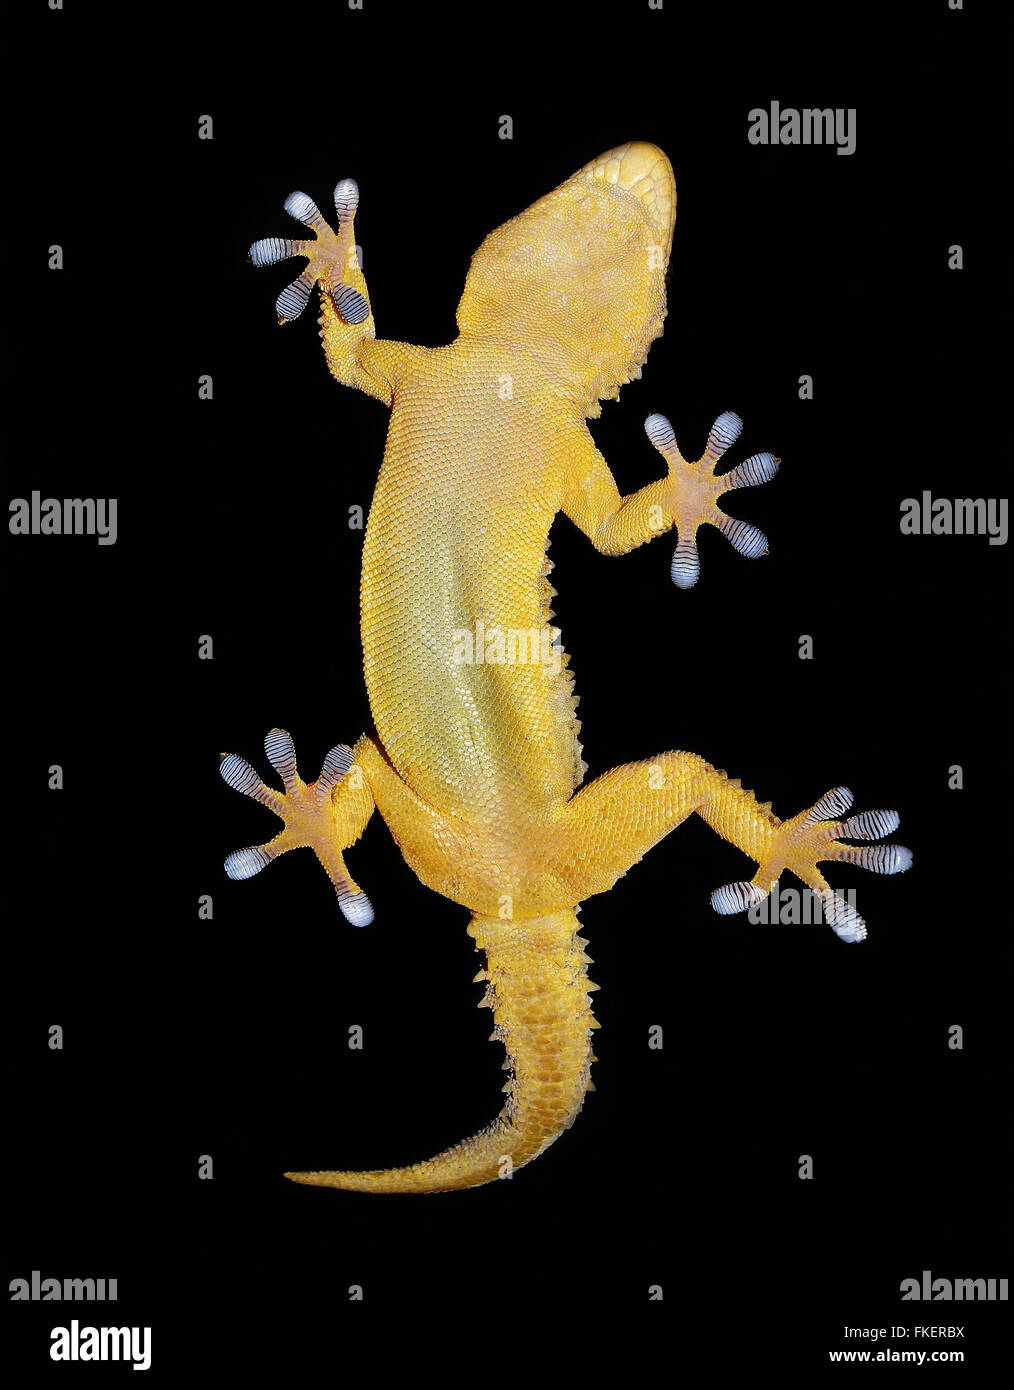 gecko on black background Stock Photo